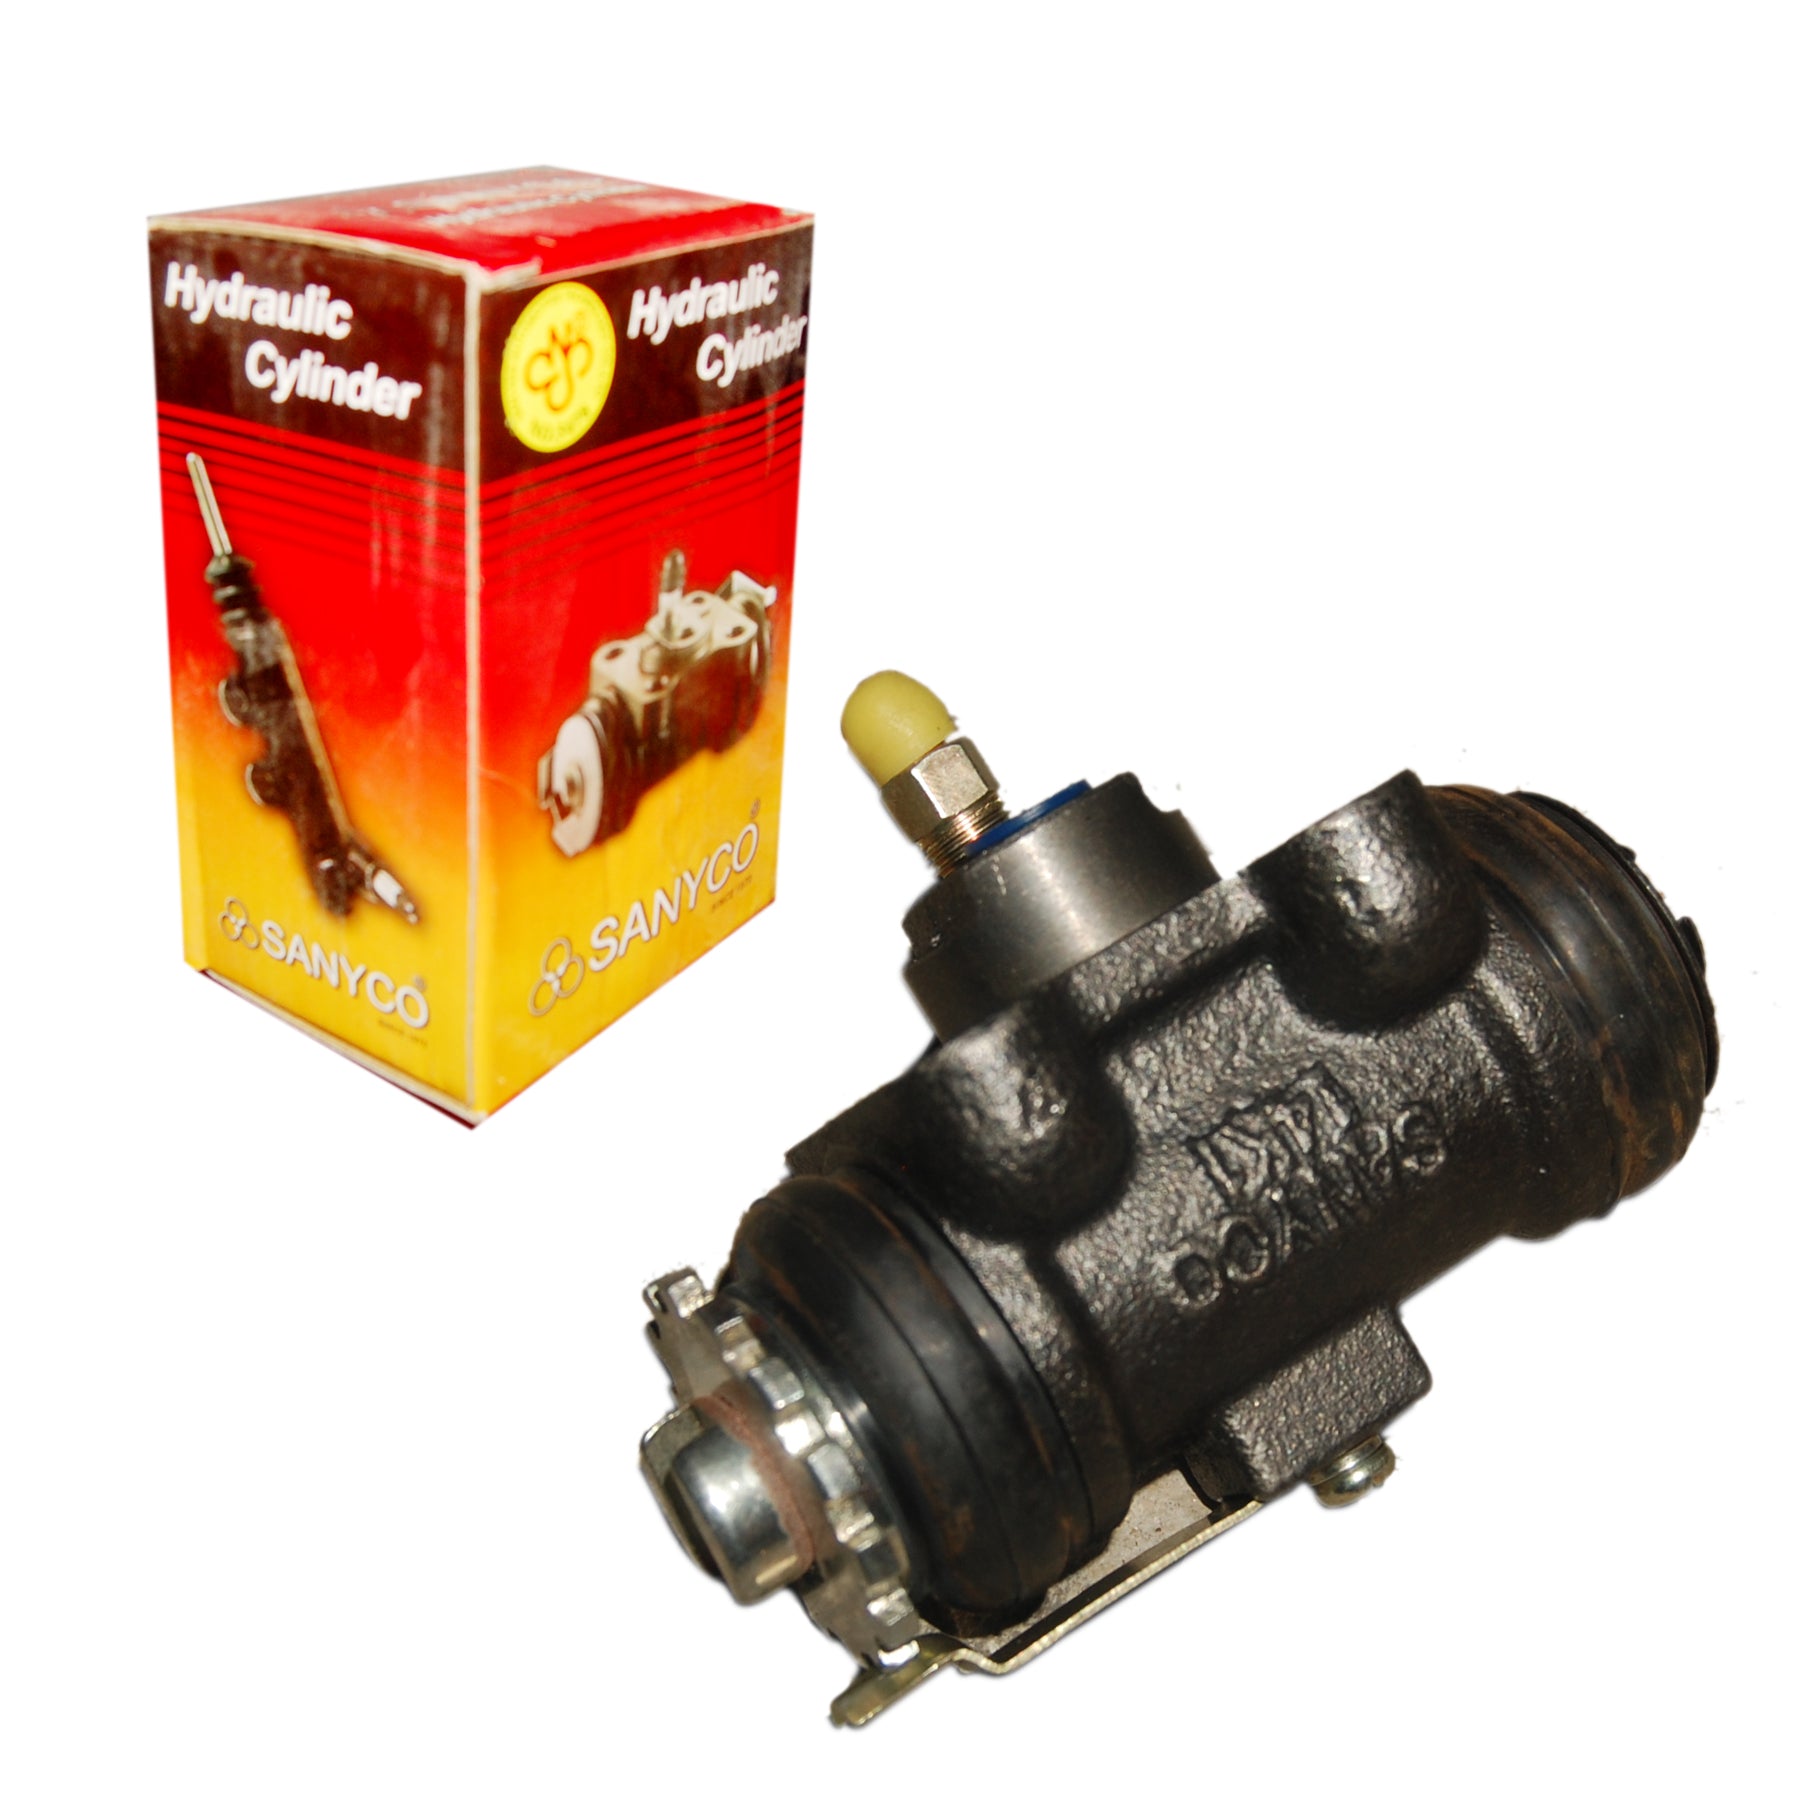 Brake Wheel Cylinder, SANYCO-2, 1 1/8", MB060582, M-1064 (006921) - Win Store